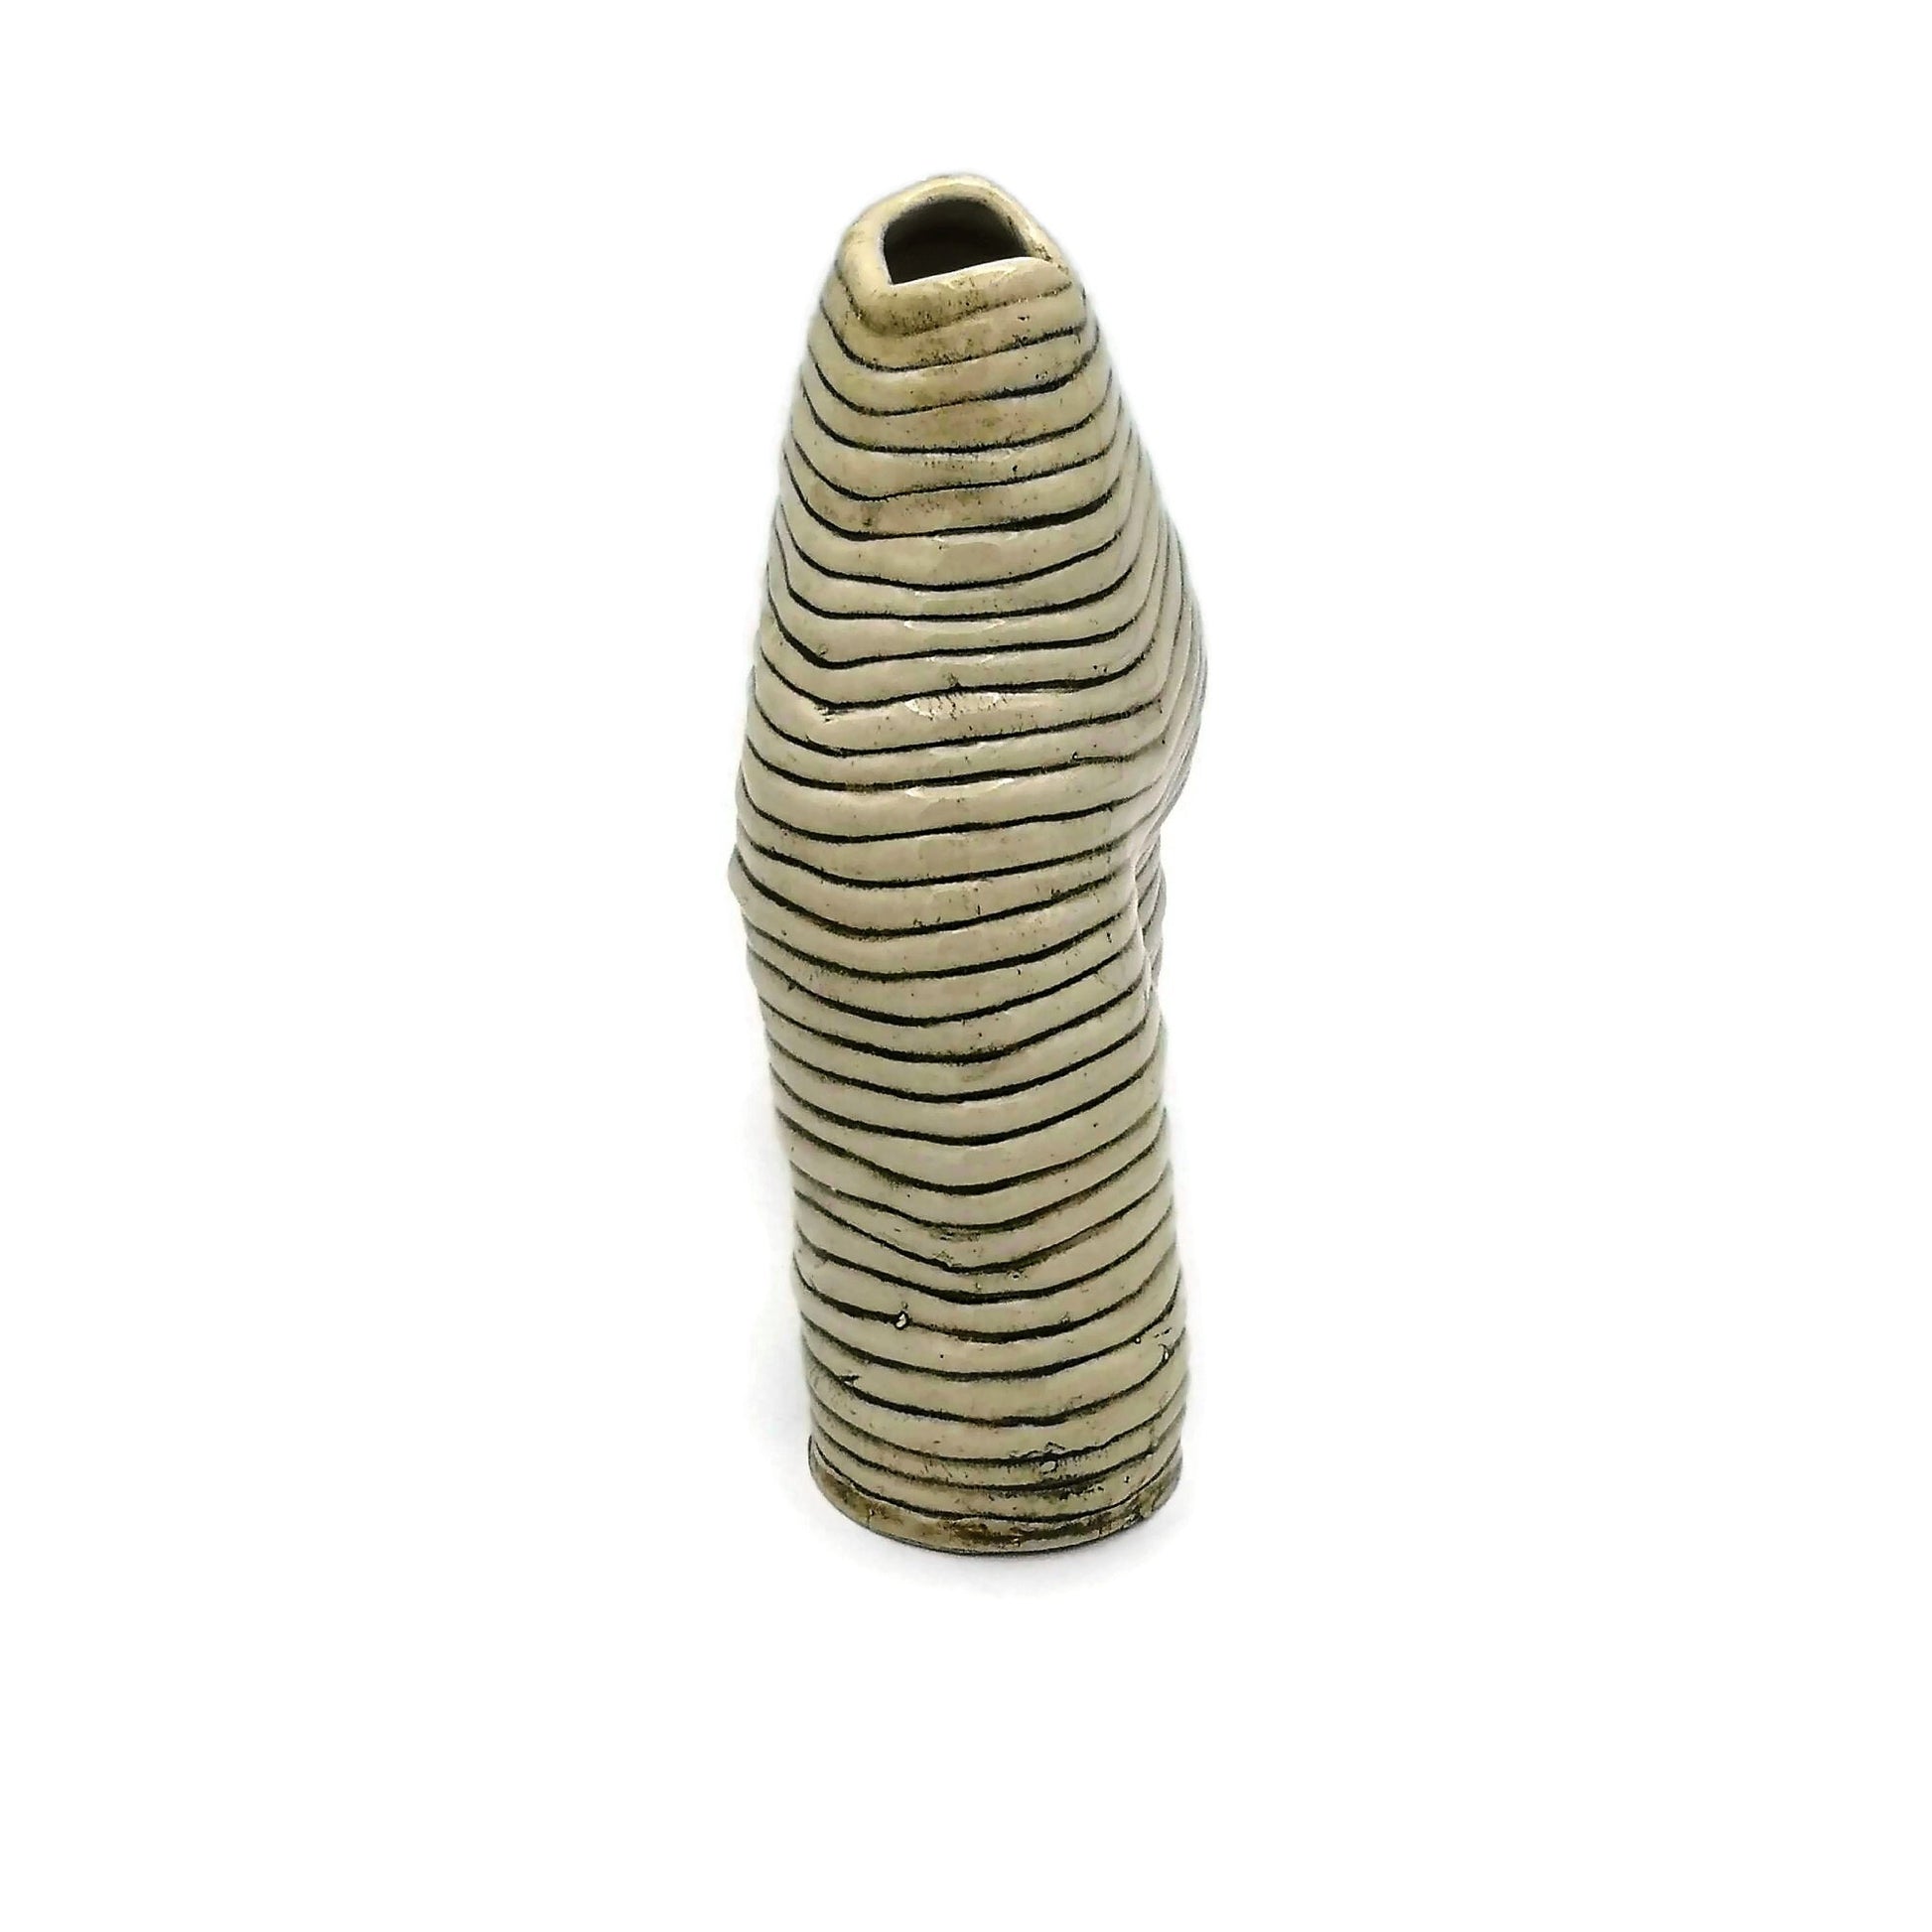 Handmade Ceramic Sculpture For Home Decor, Contemporary Art Textured Vase For Table, Custom Wedding Gift, Mid Century Modern Stoneware Vase - Ceramica Ana Rafael